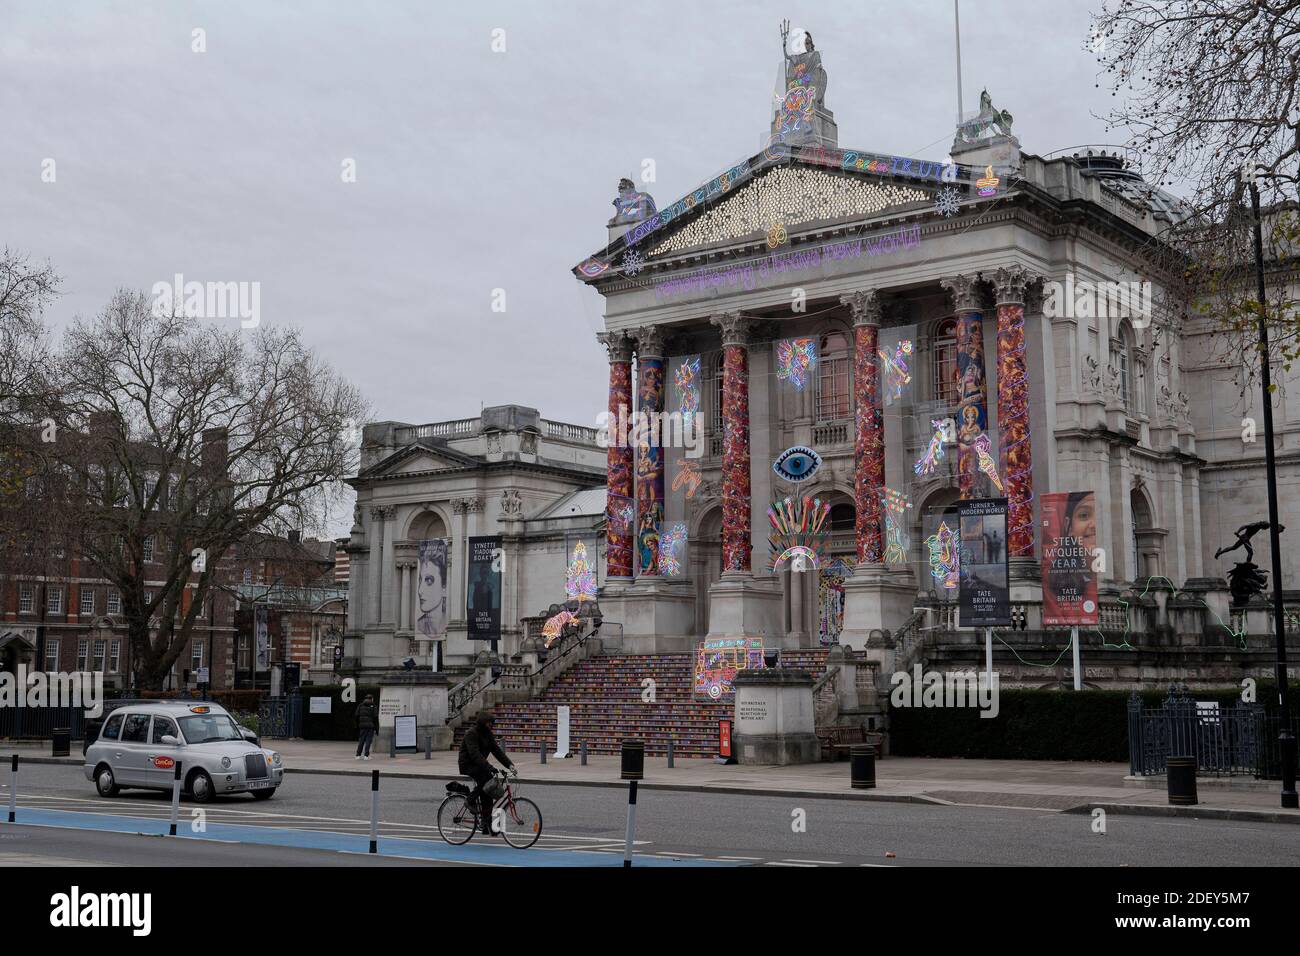 London, England - 02-12-2020. Remembering A Brave New World. A Tate Britain 2020 winter commission by Chila Kumari Singh Burman. (Photo by Sam Mellish Stock Photo